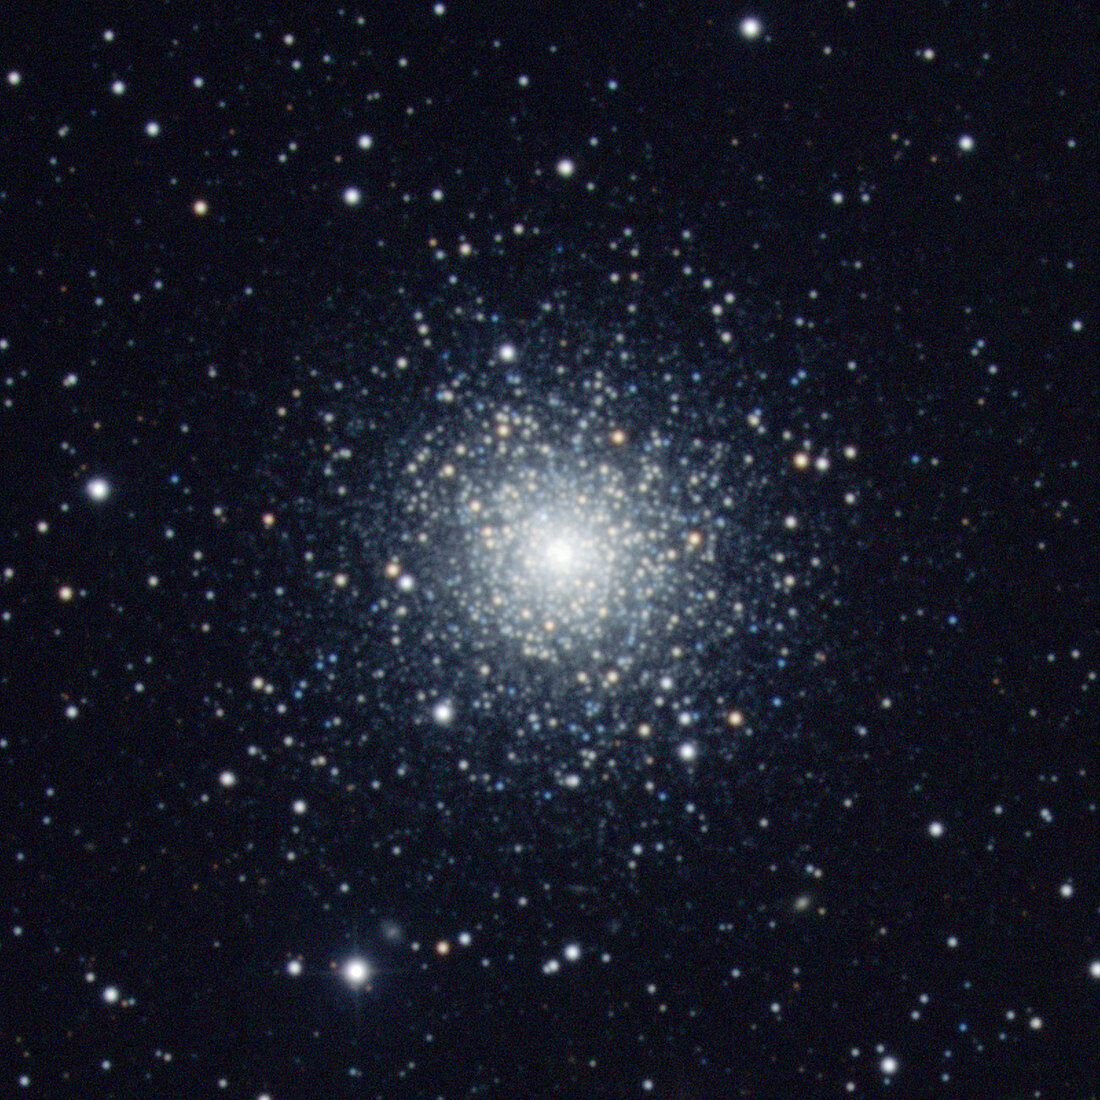 Globular cluster M75